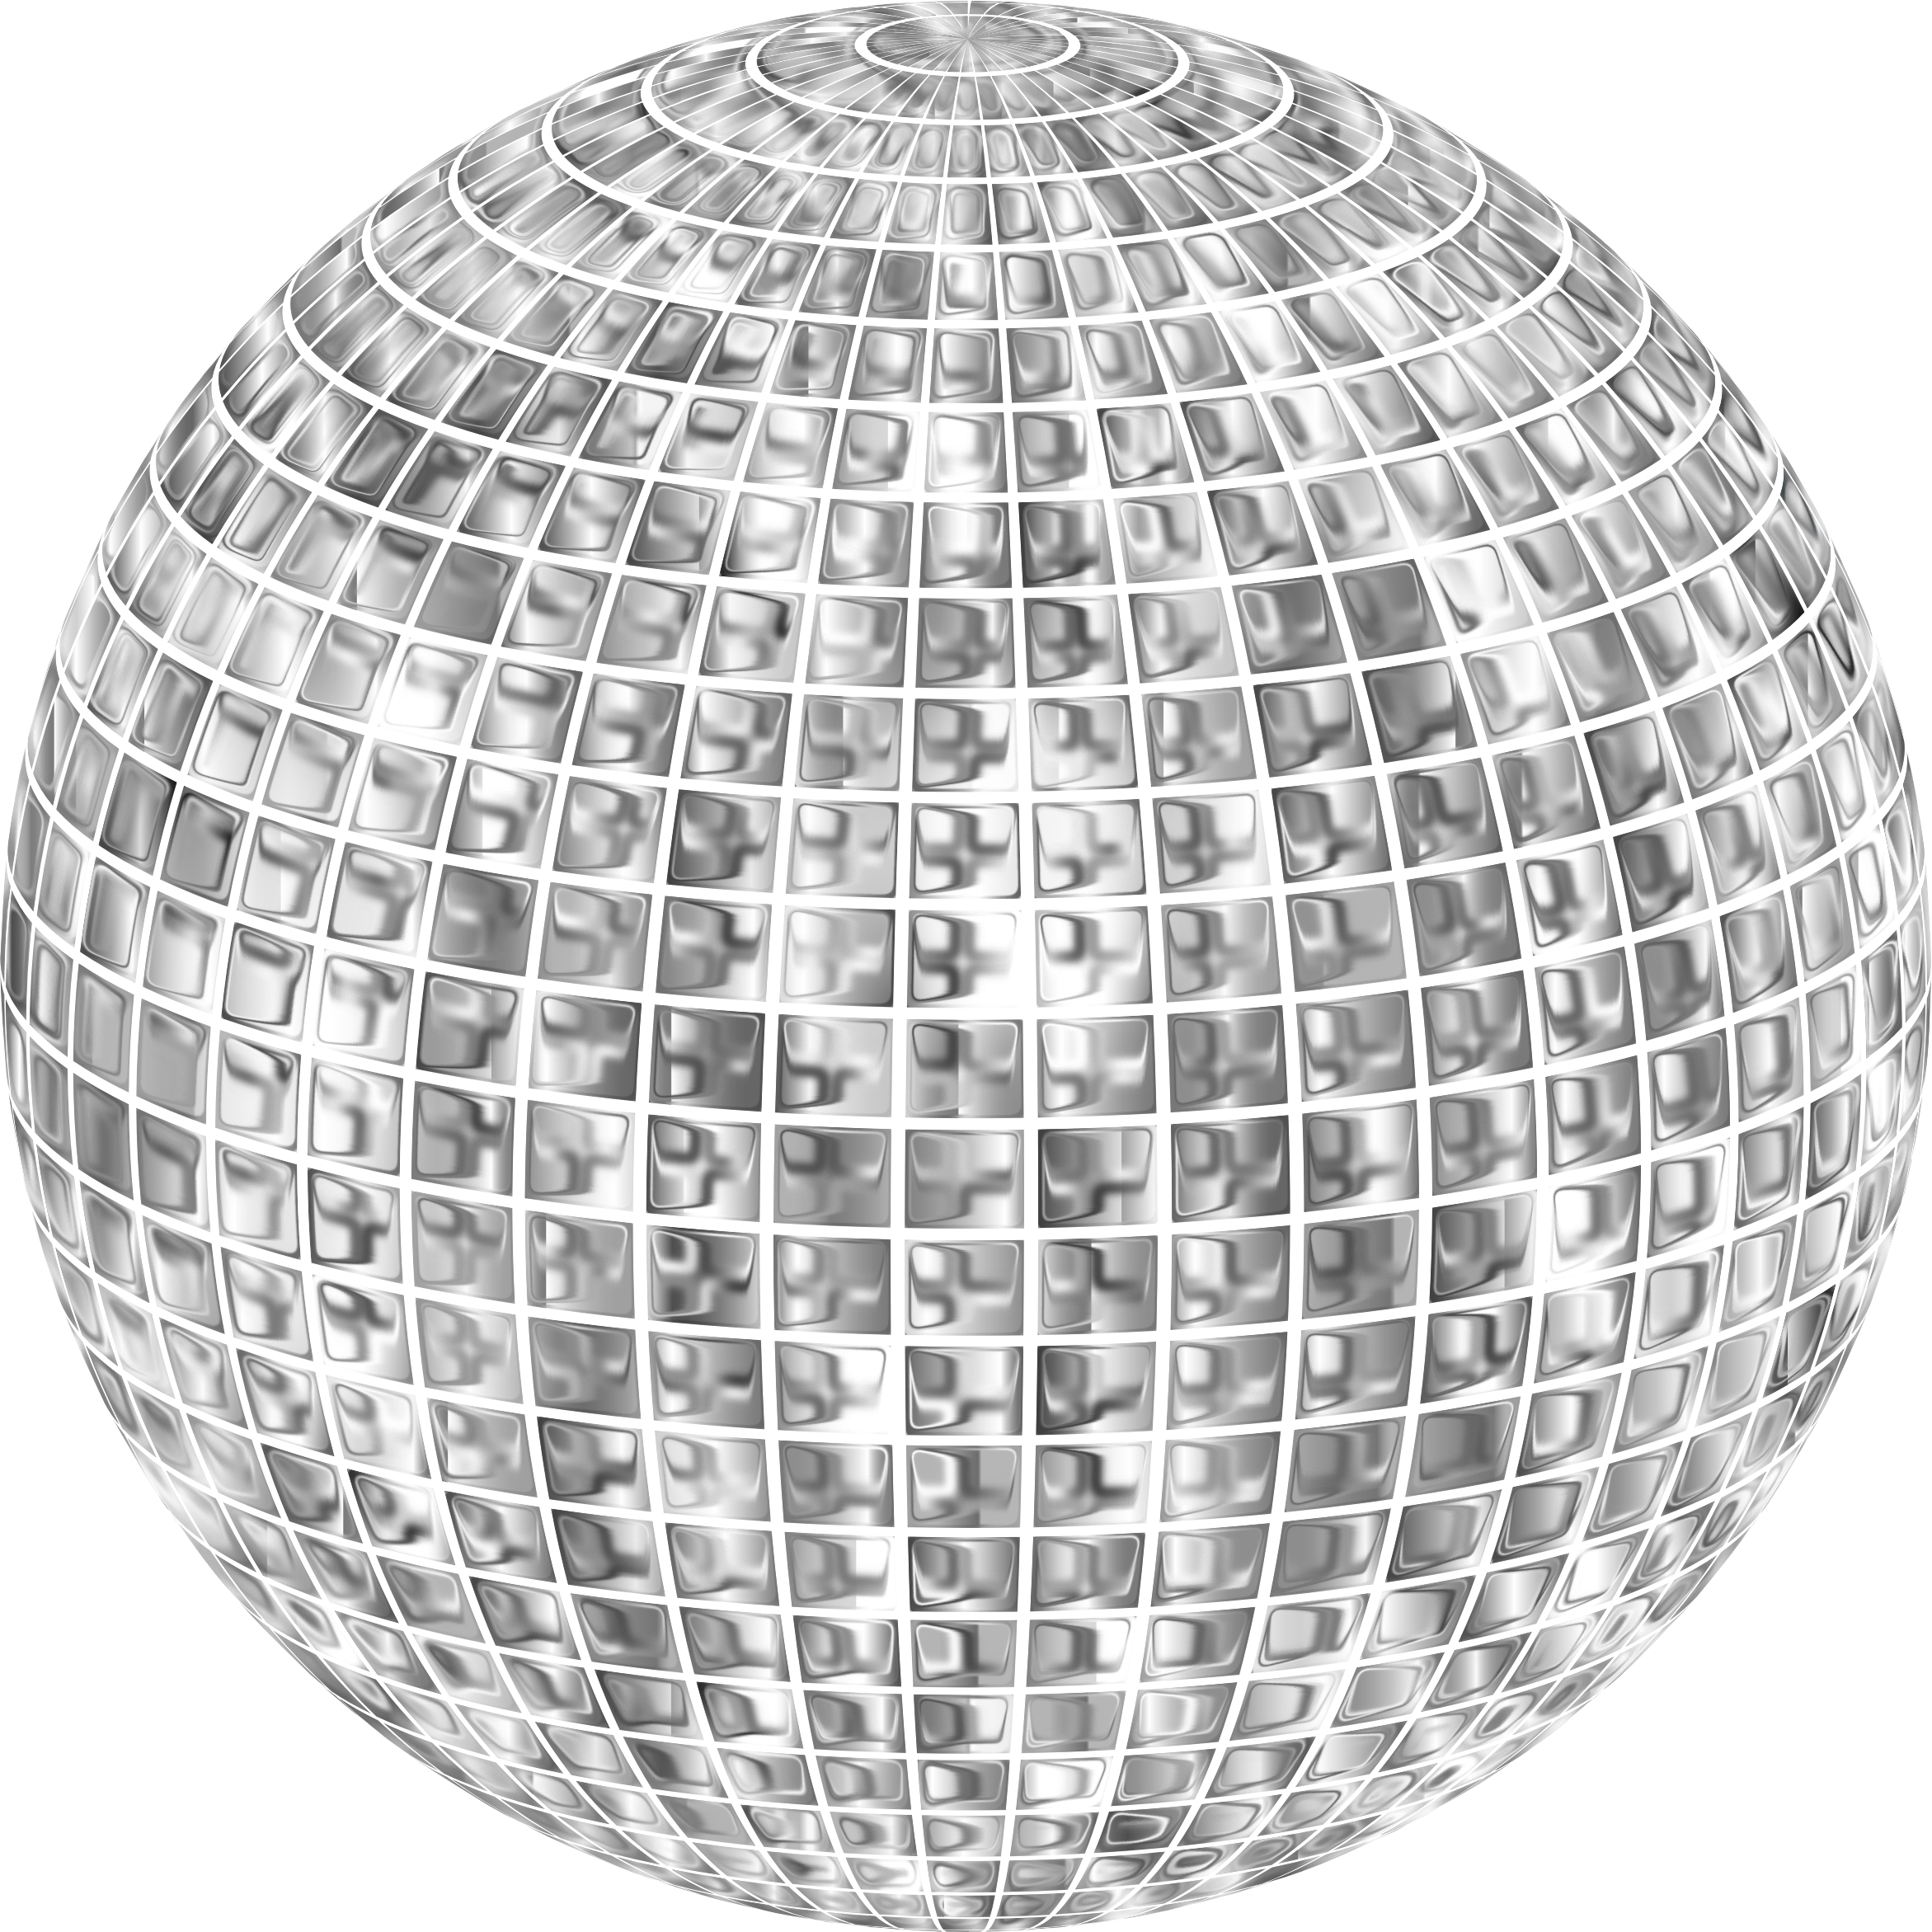 disco ball clipart